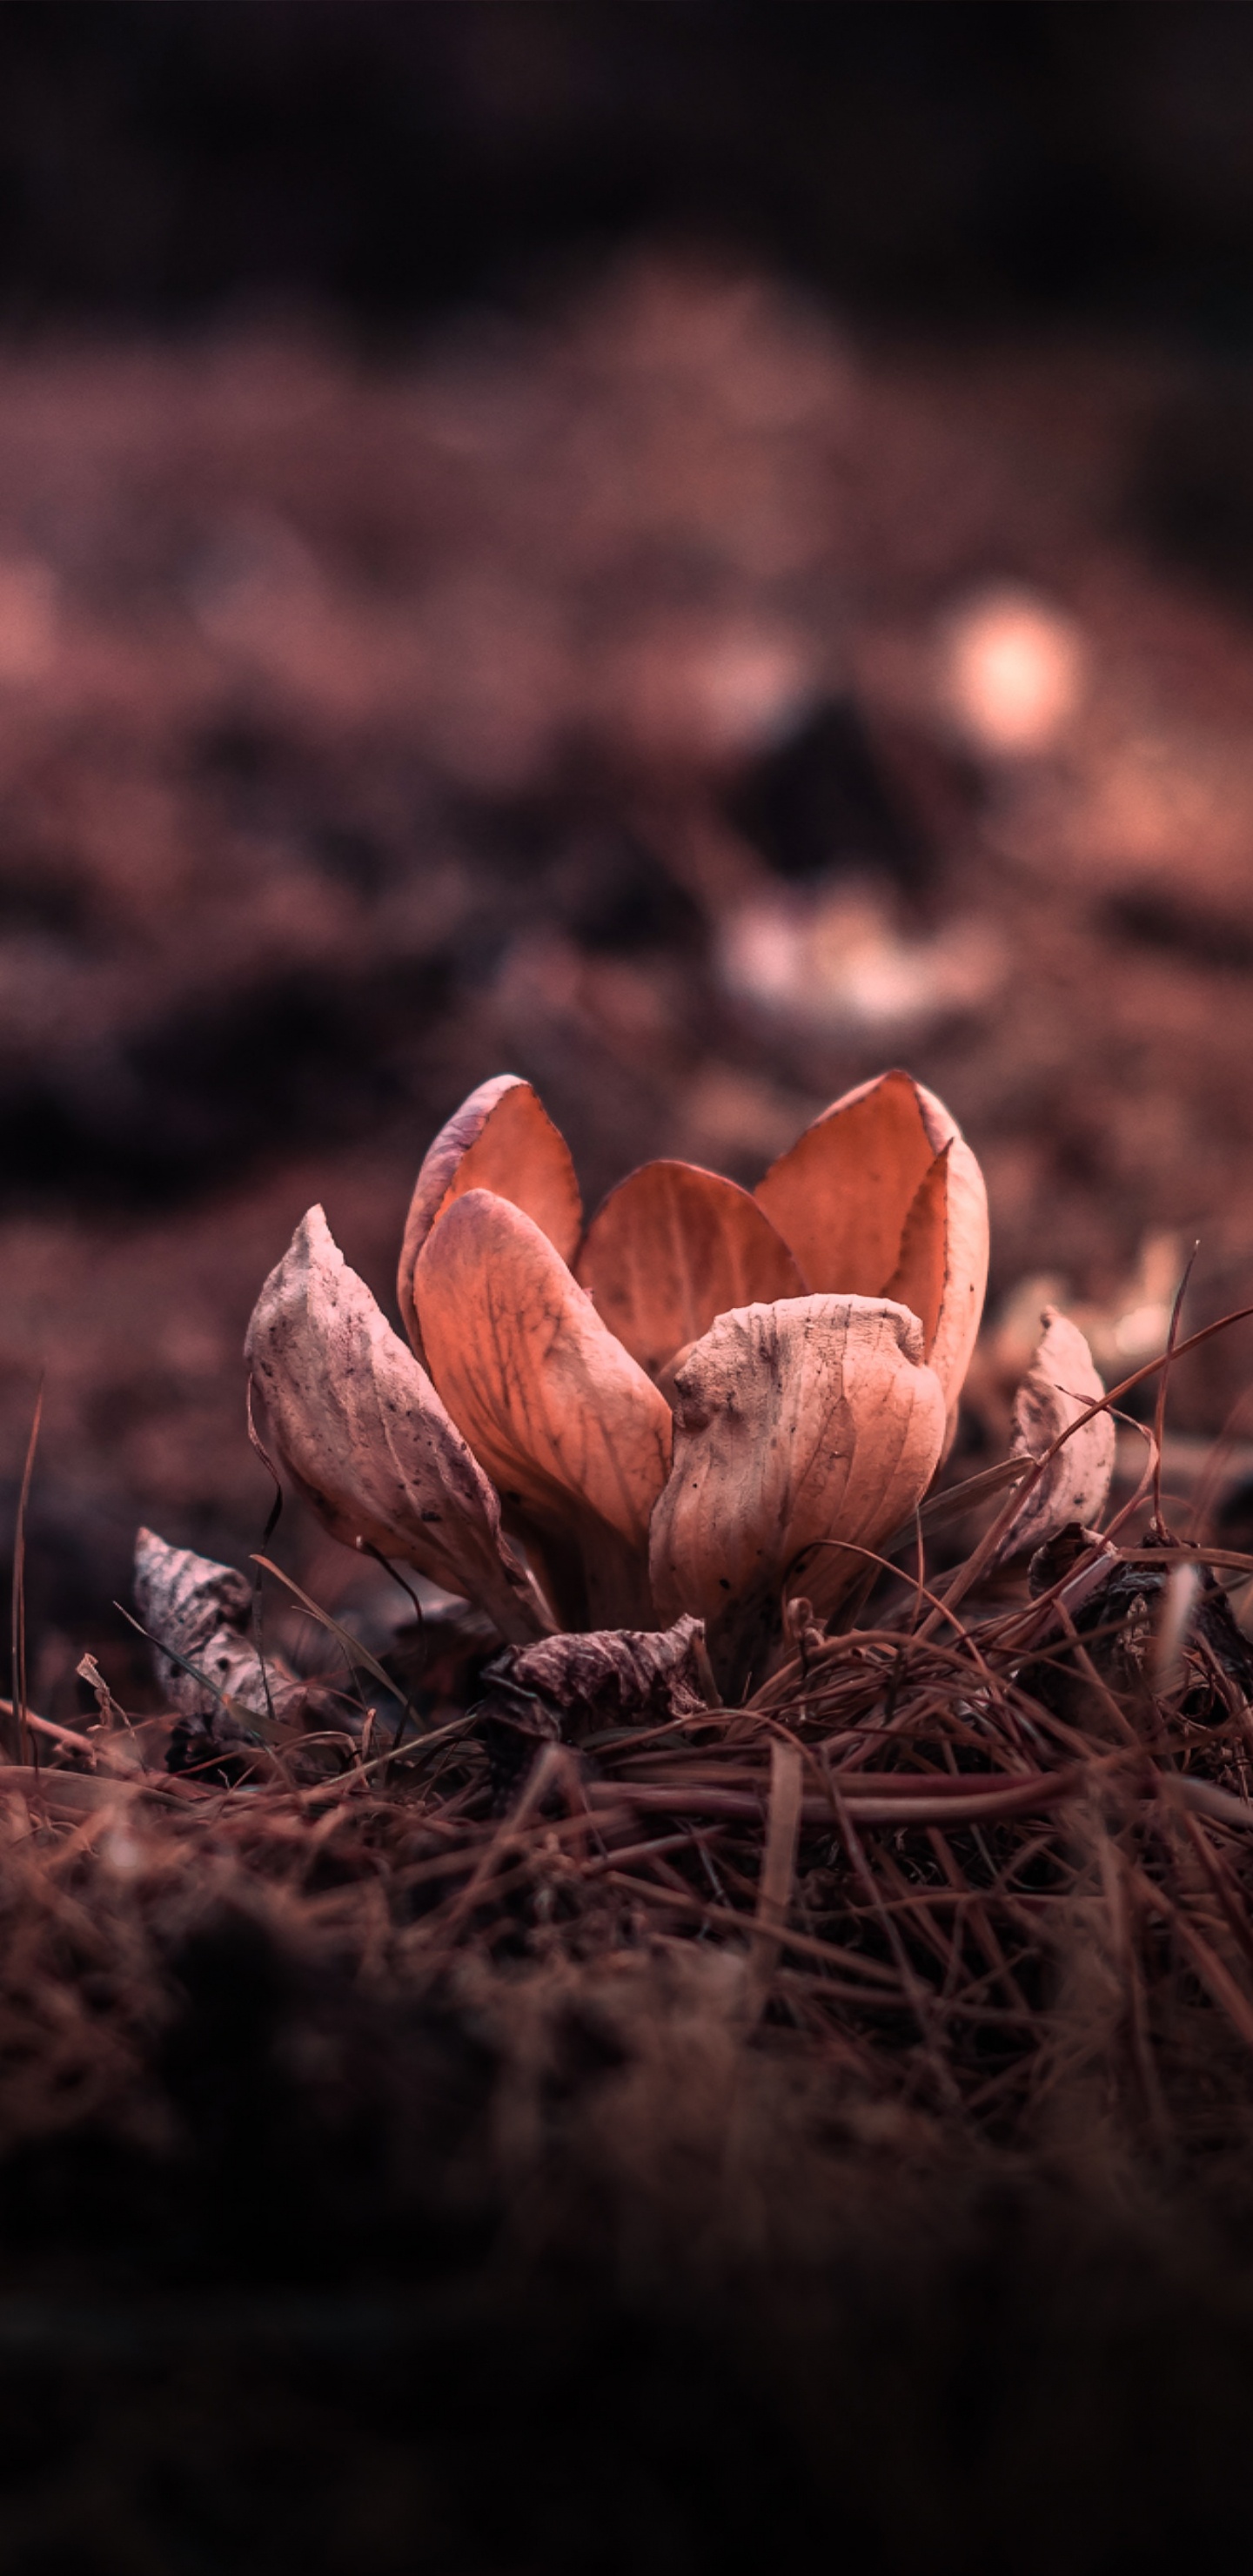 Brown Mushrooms on Brown Dried Leaves. Wallpaper in 1440x2960 Resolution